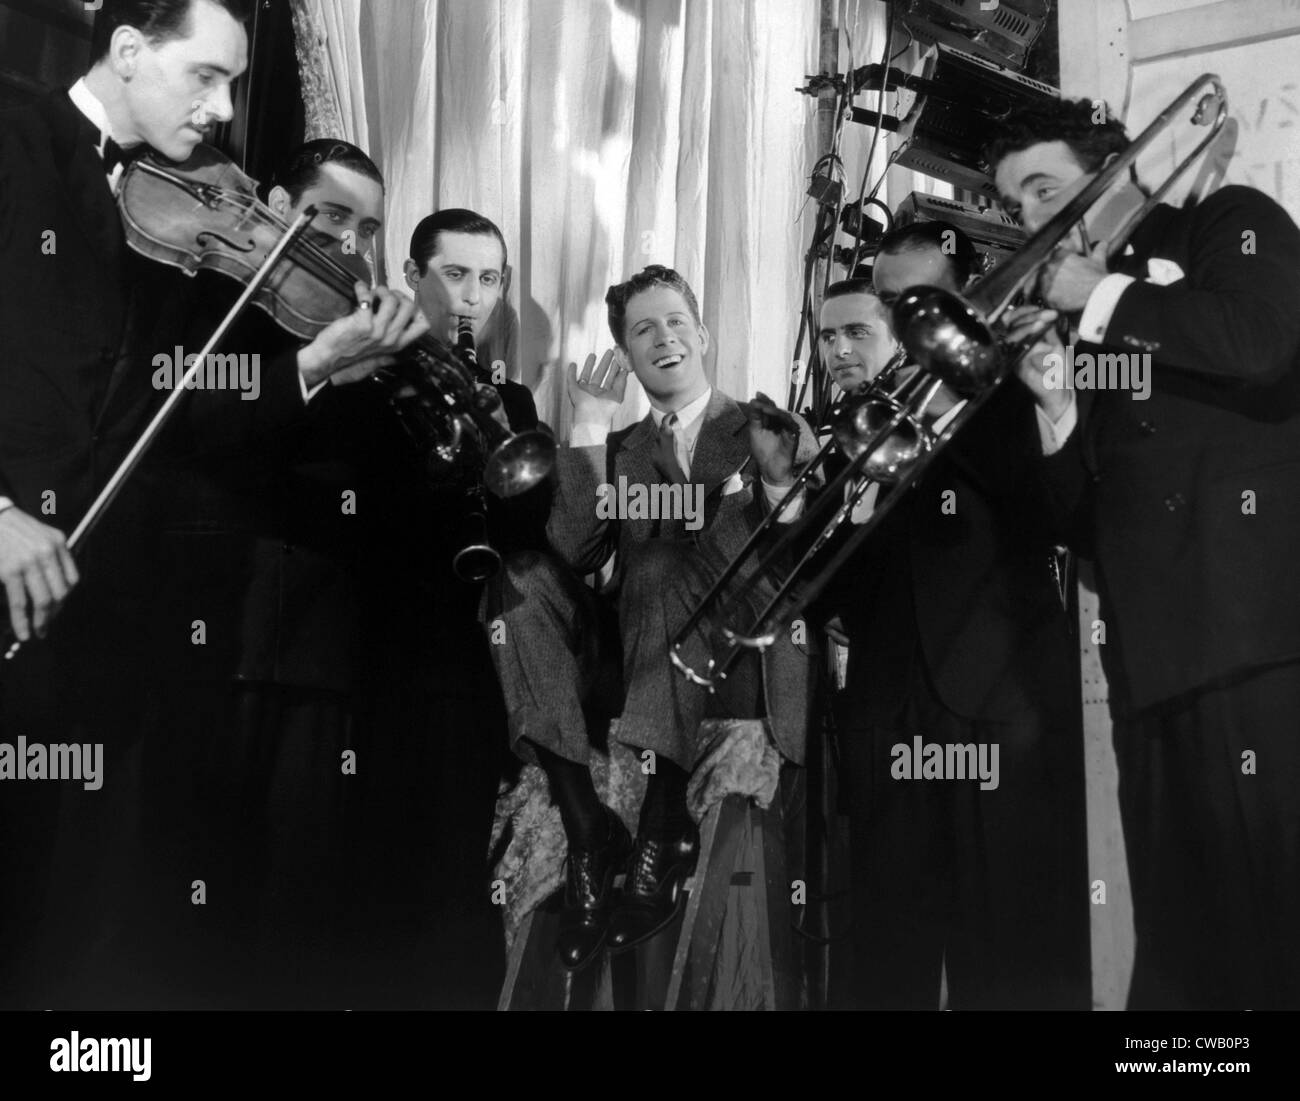 SWEET MUSIC, Rudy Vallee (center), 1935 Stock Photo